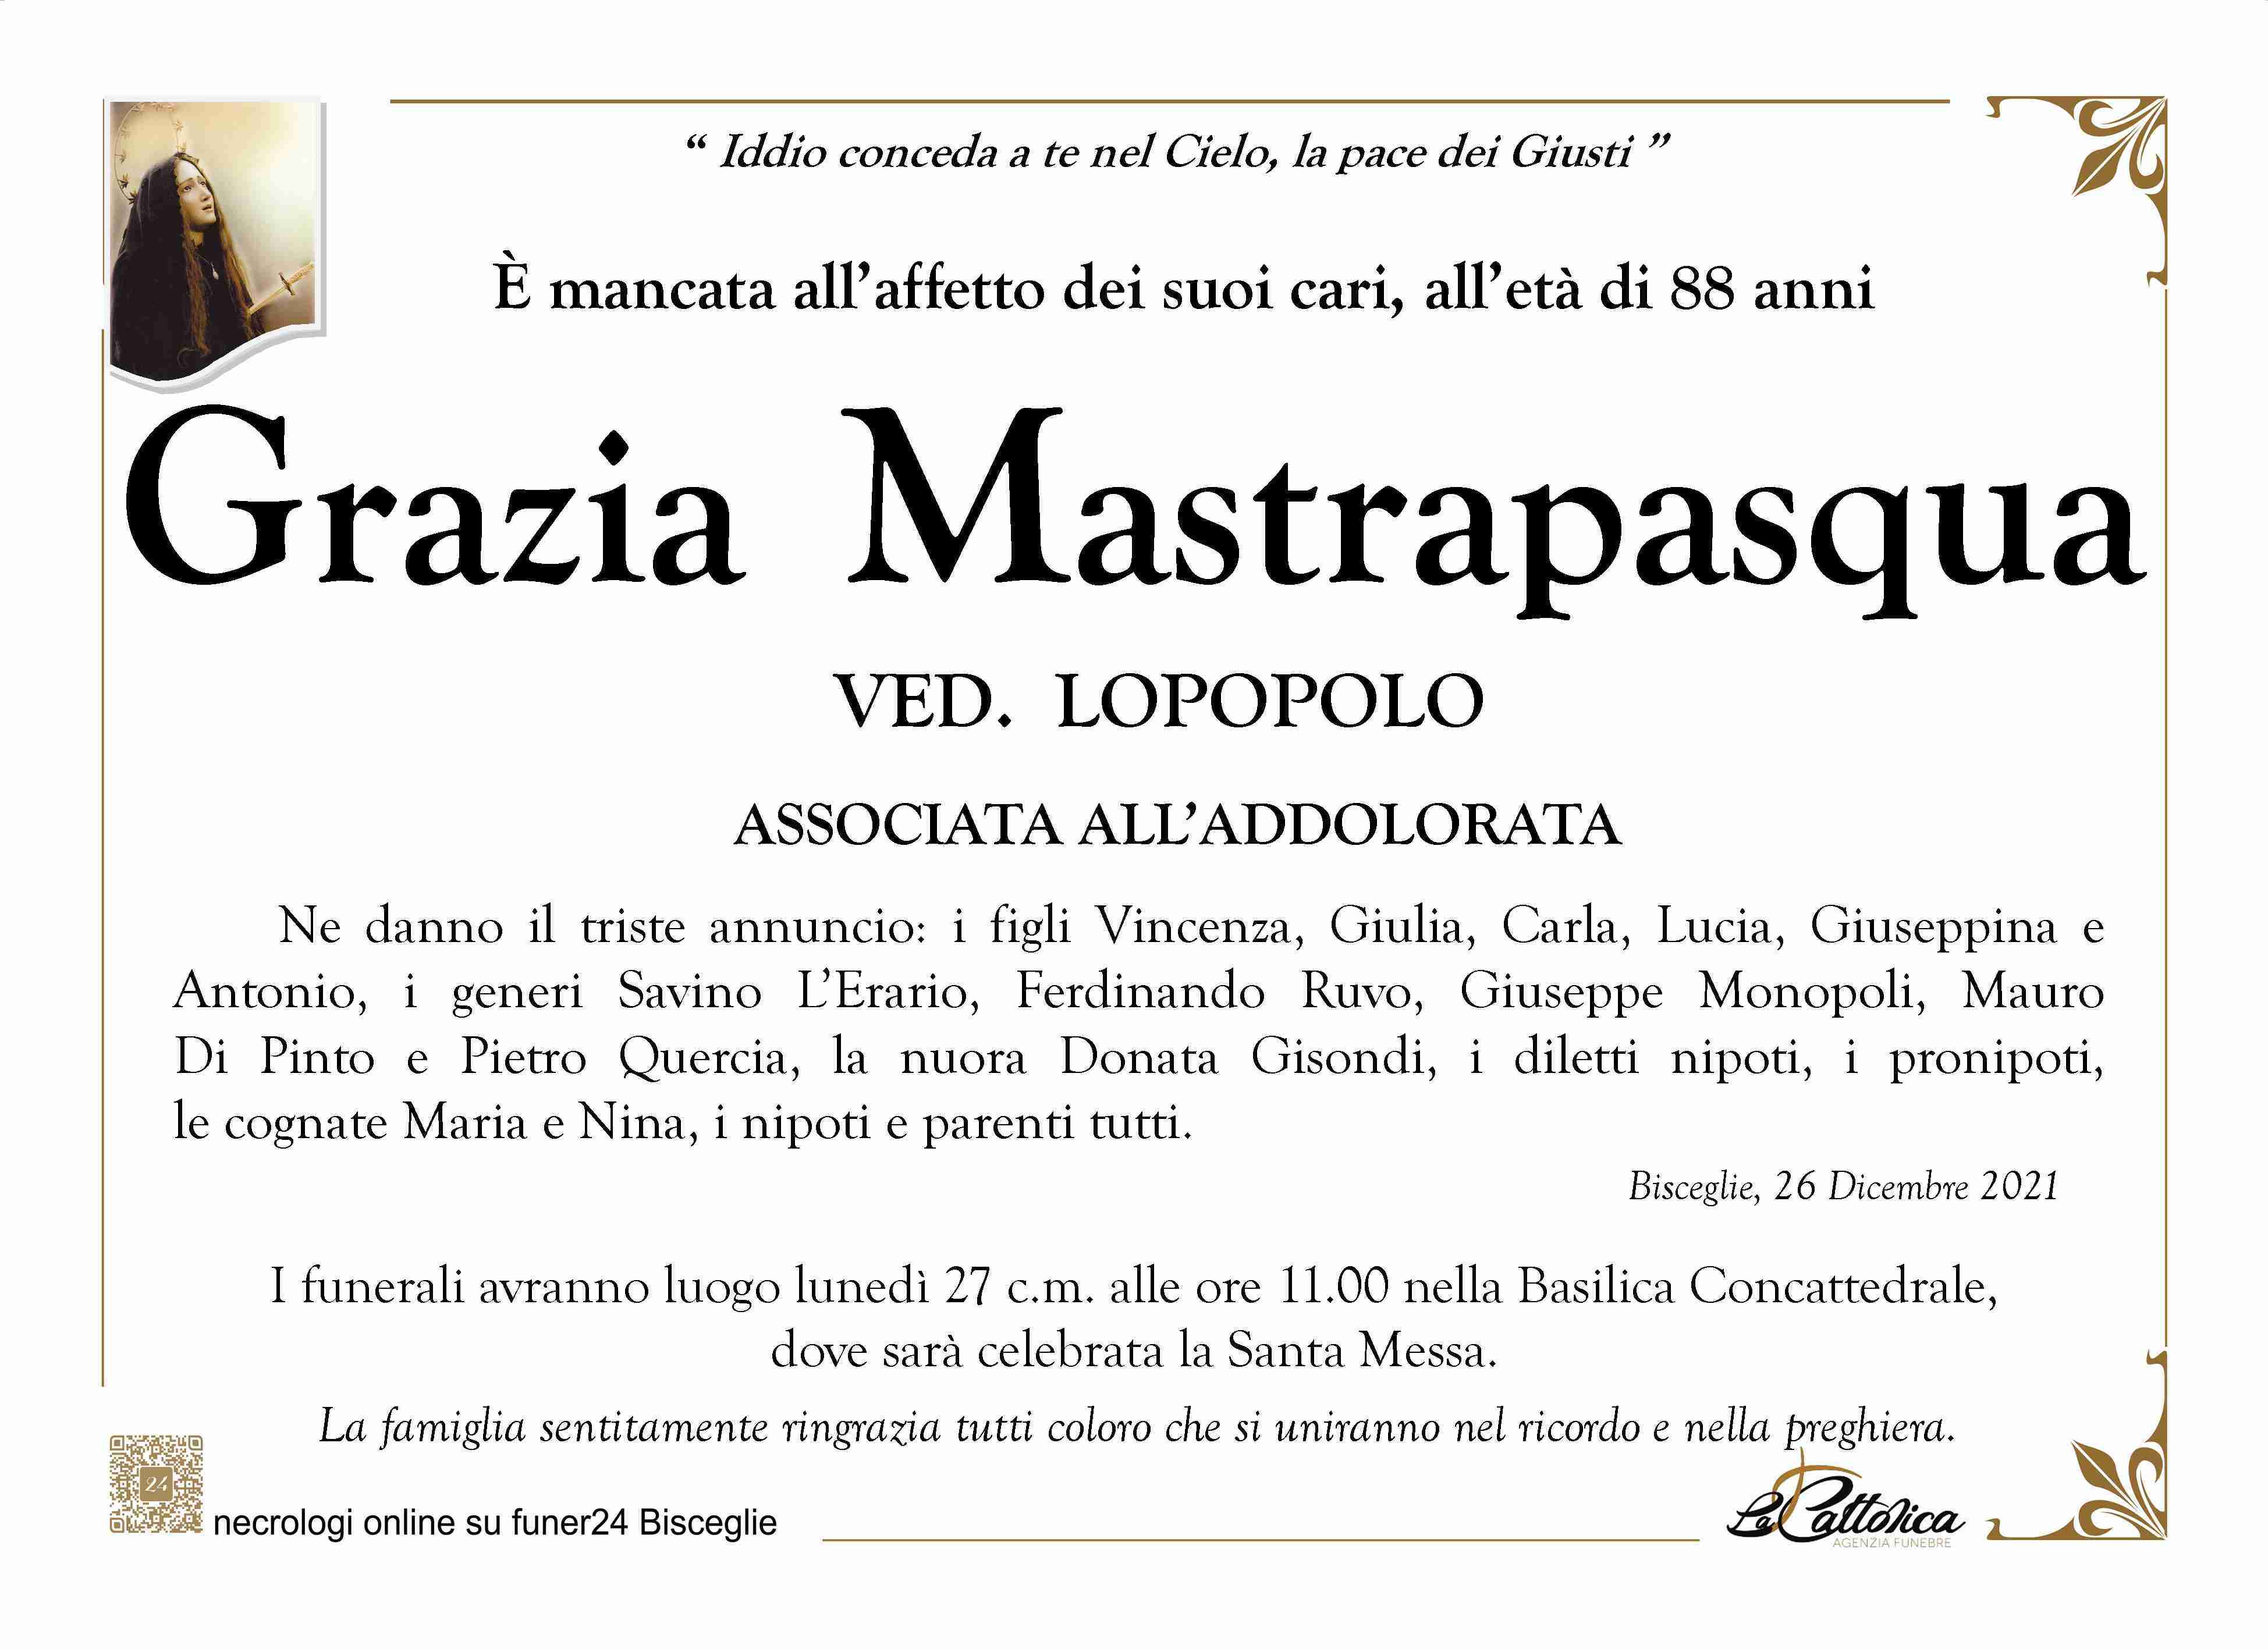 Grazia Mastrapasqua